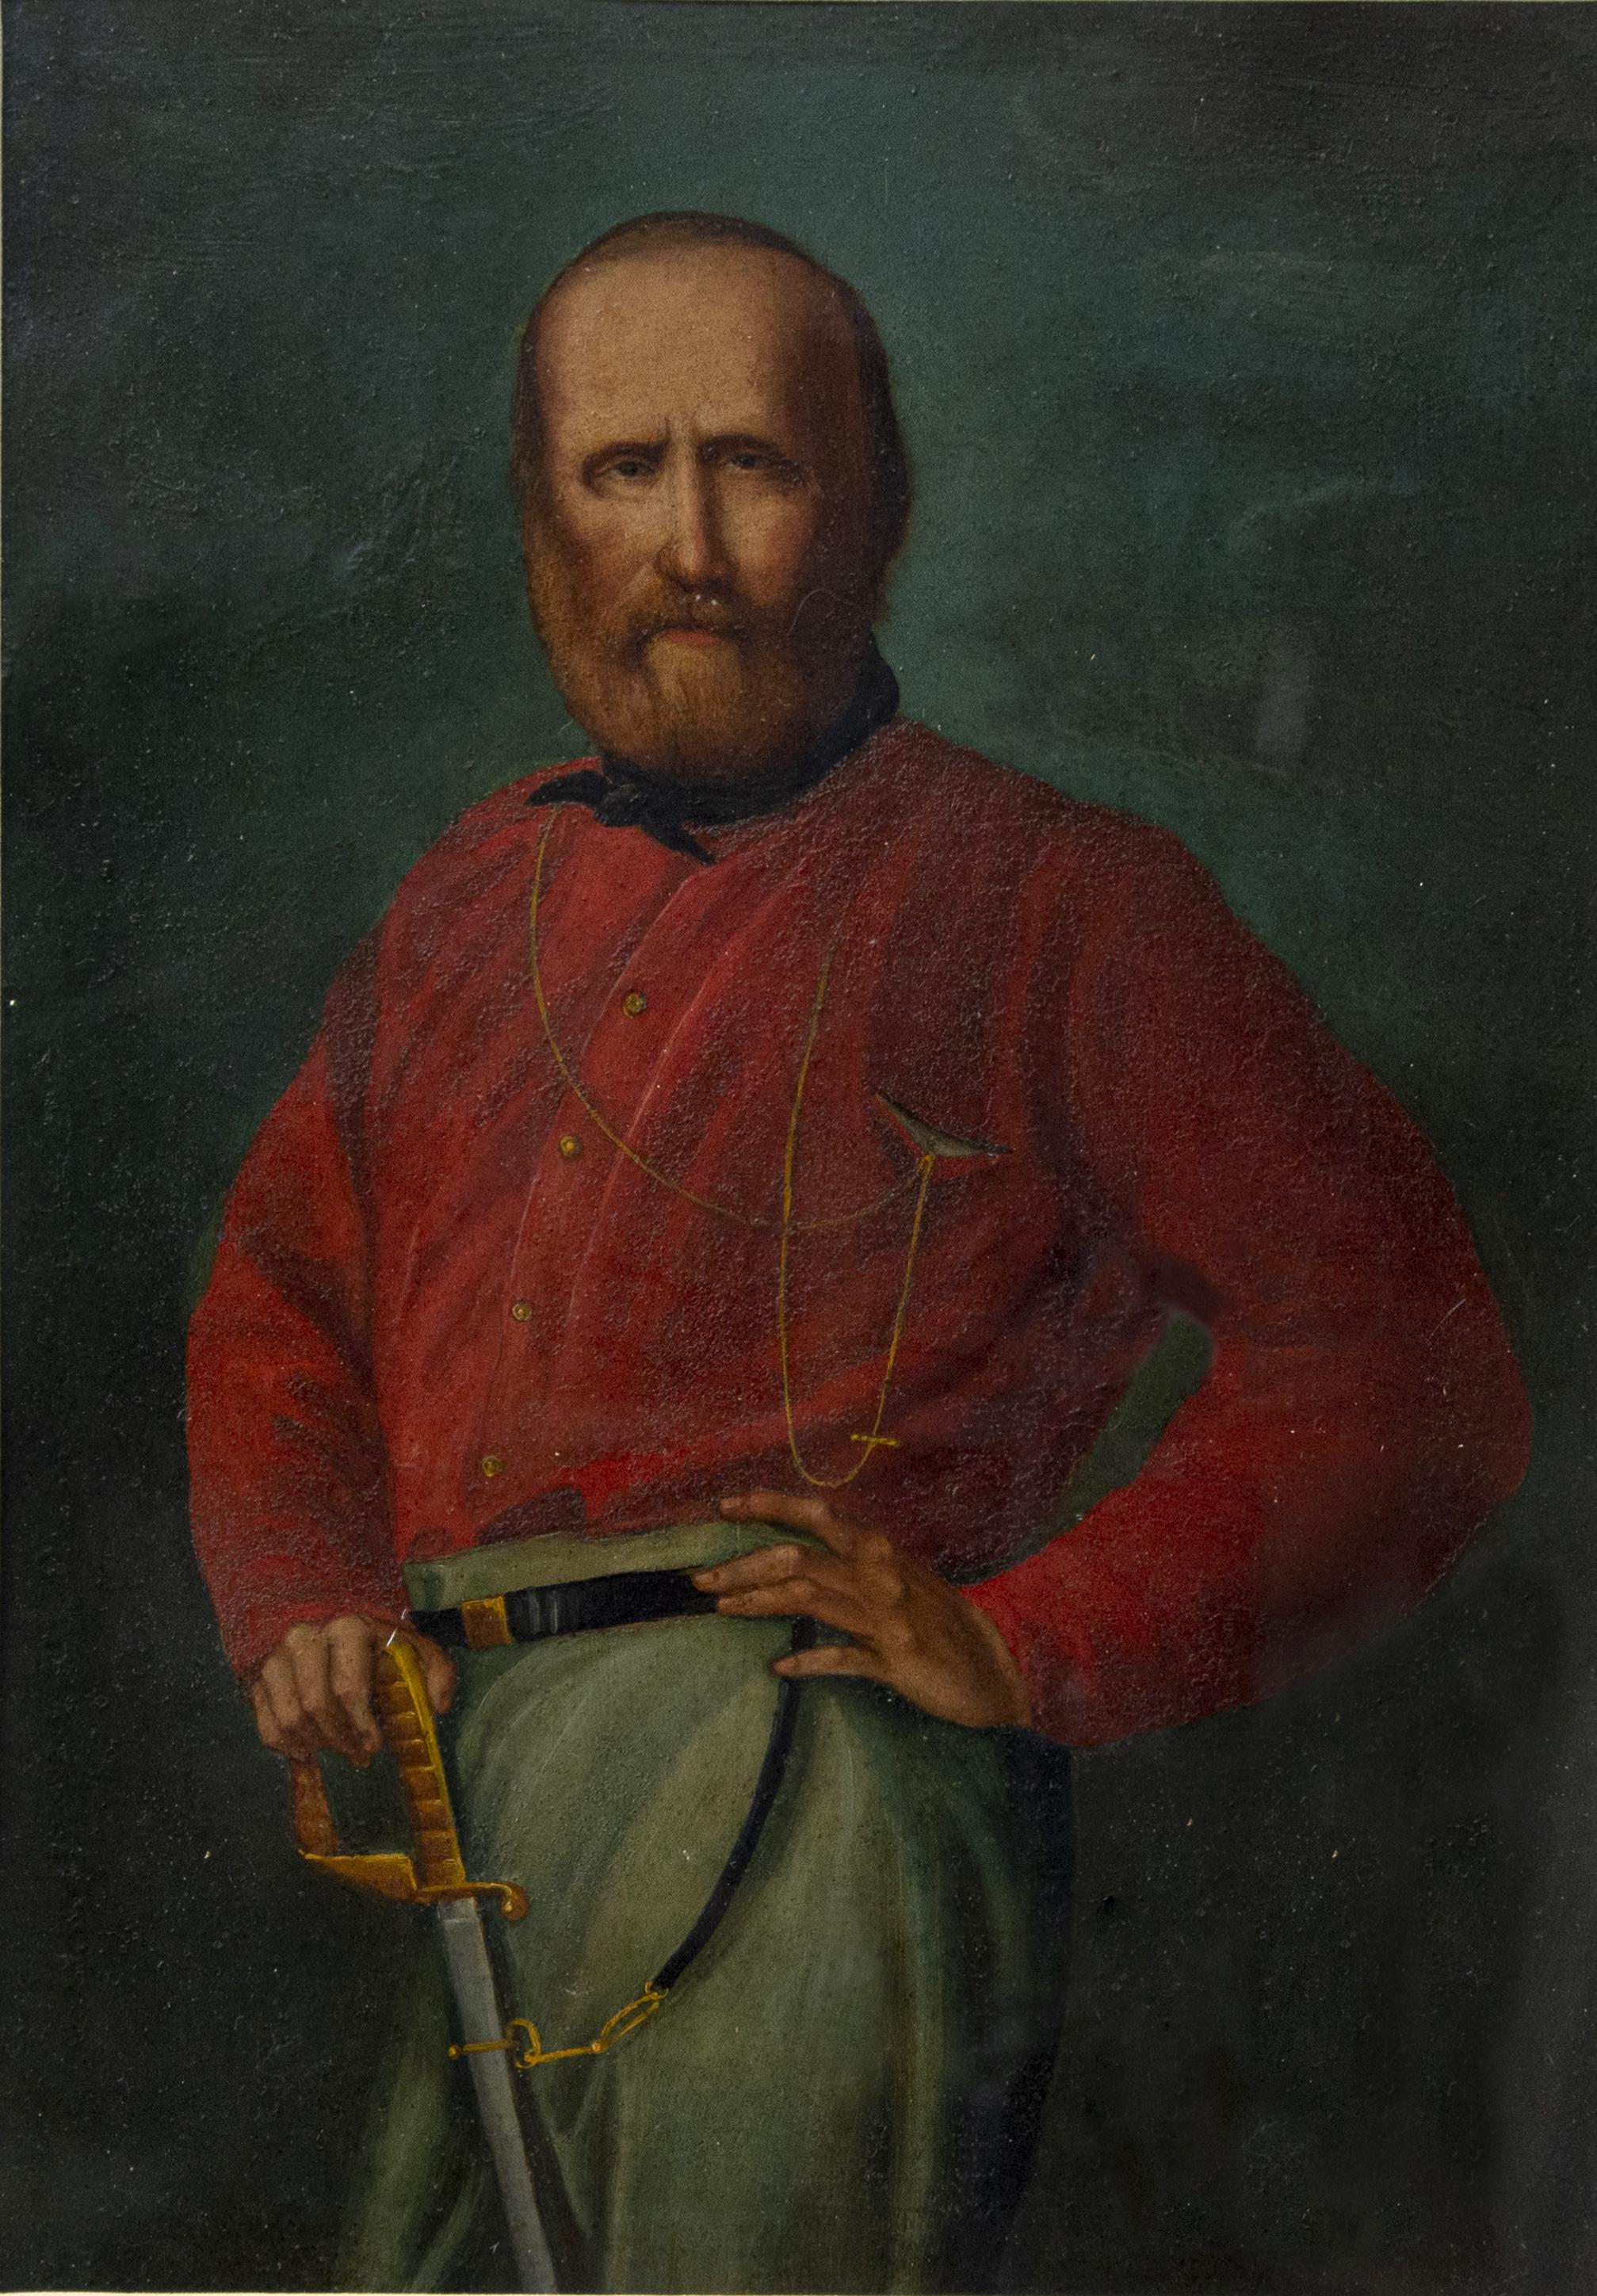 Portrait of Young Giuseppe Garibaldi - Oil on Copper - 19th Century